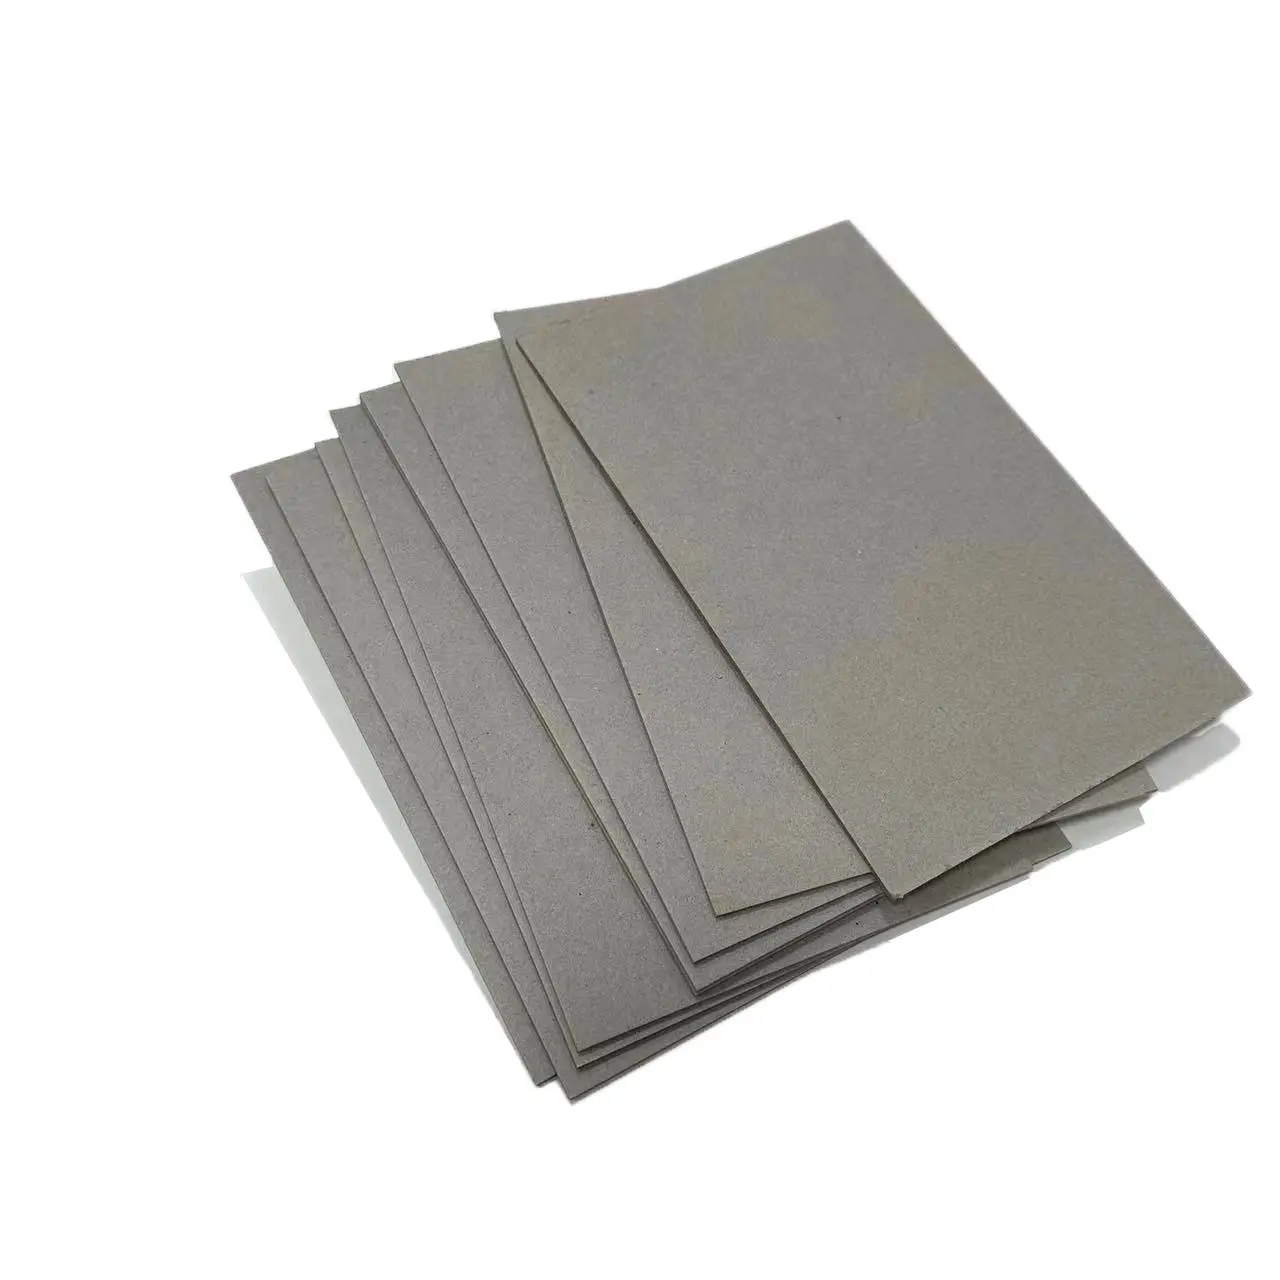 Fabrikgroßhandel mit hochwertigen 2,4 mm laminierten grauen Bandplatten grauer Karton Papierbögen